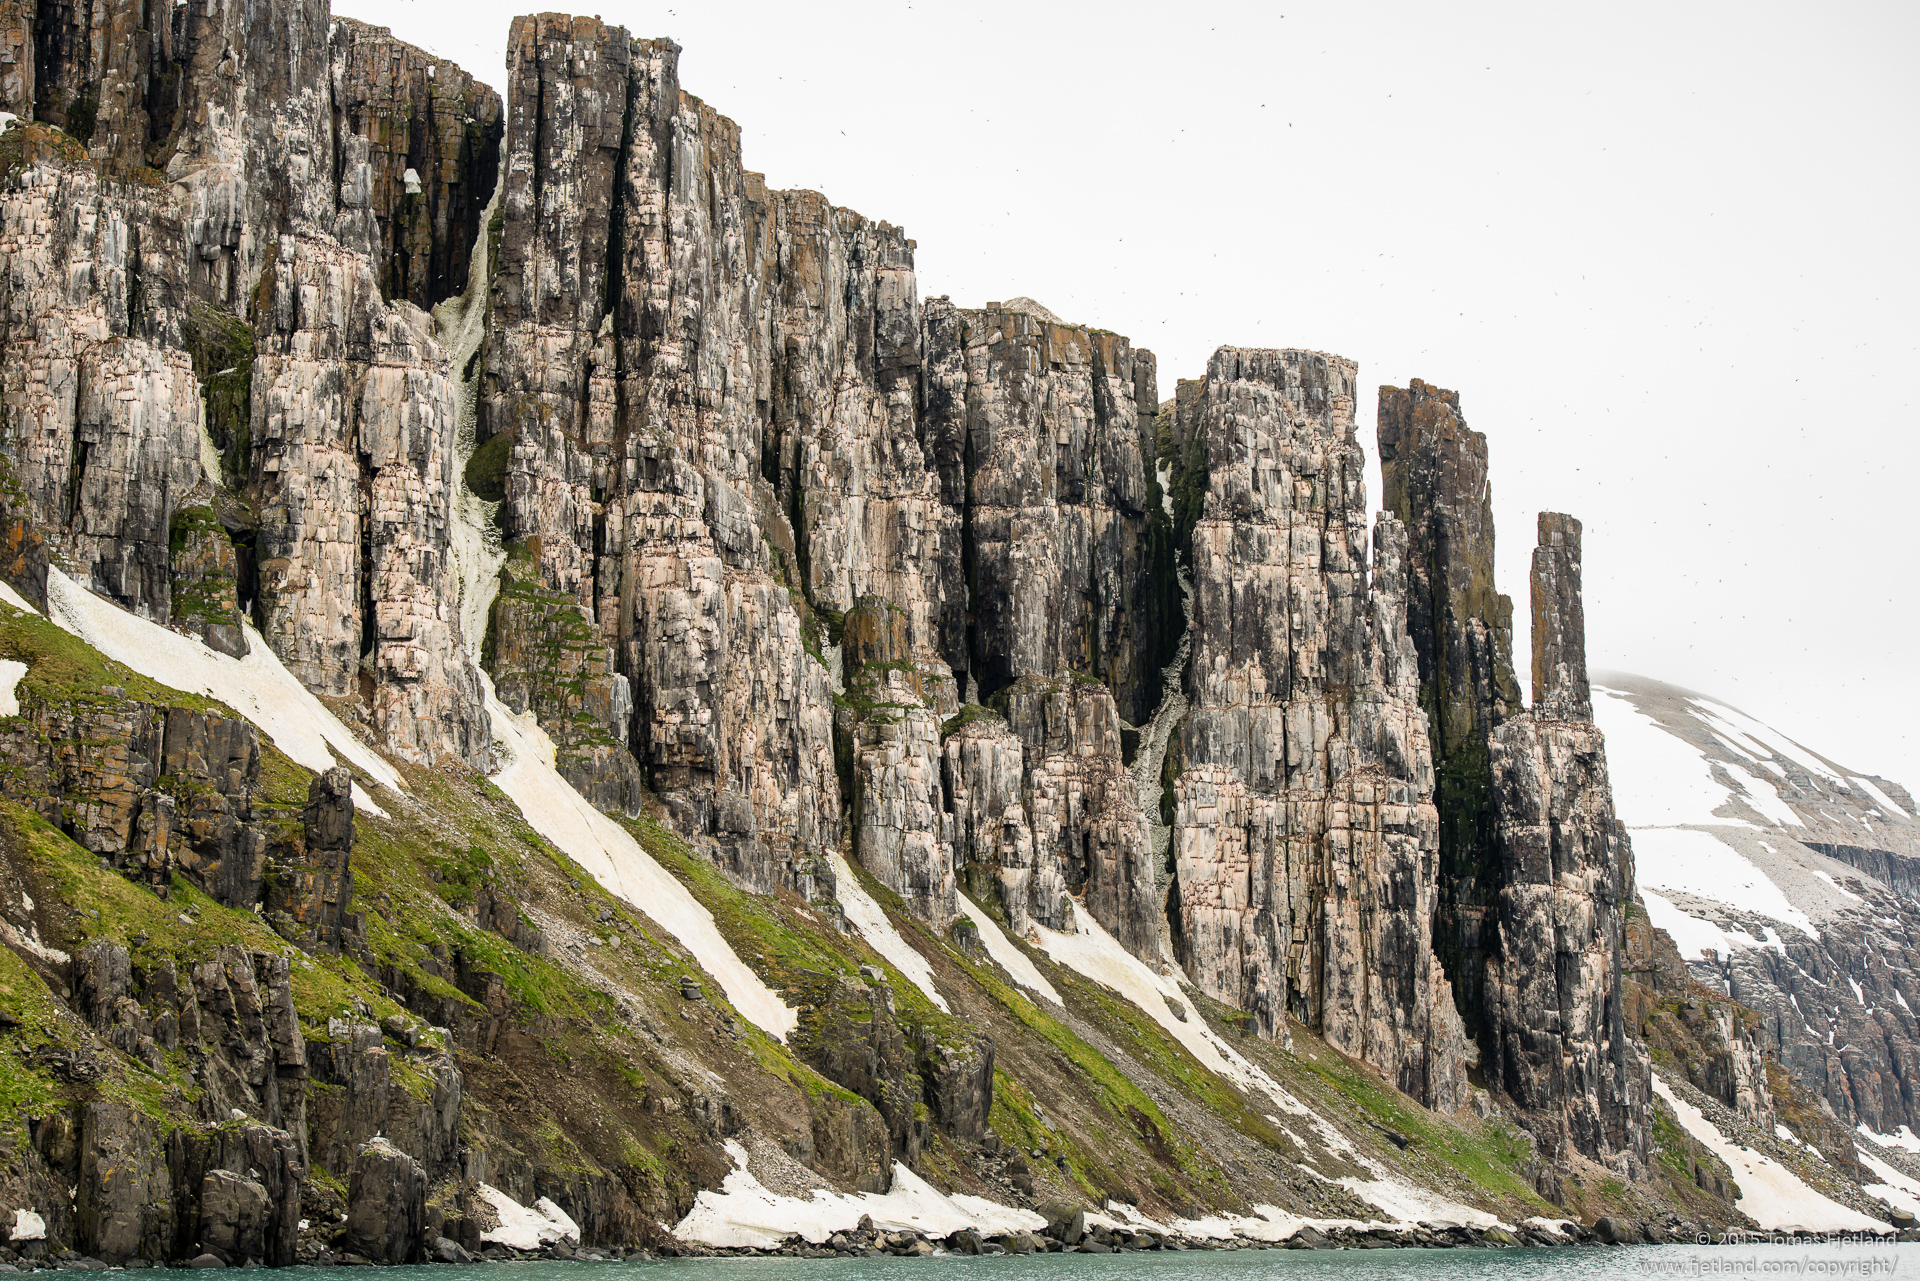 A small part of the bird cliffs Alkefjellet